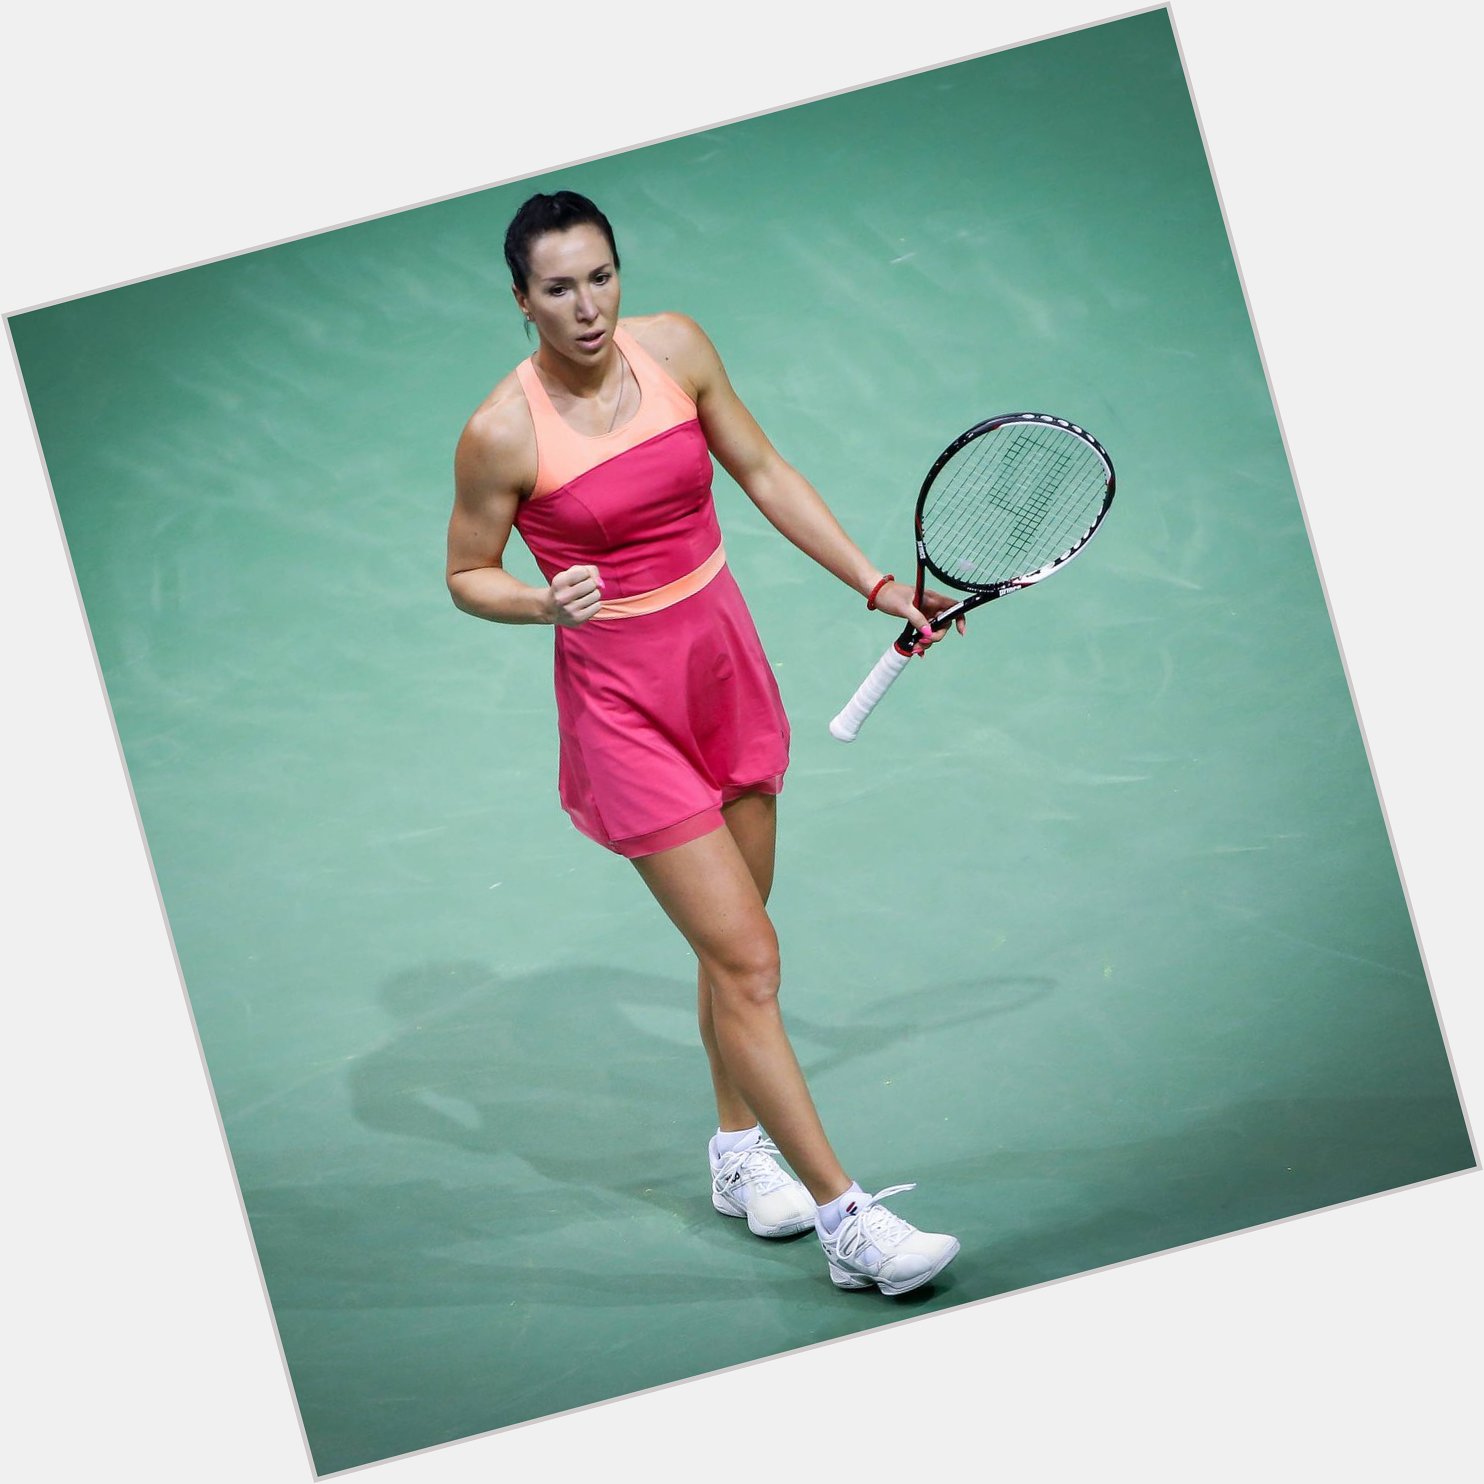  Former world No. 1 2008 US Open finalist 15 career singles titles 

Happy Birthday, Jelena Jankovic! 